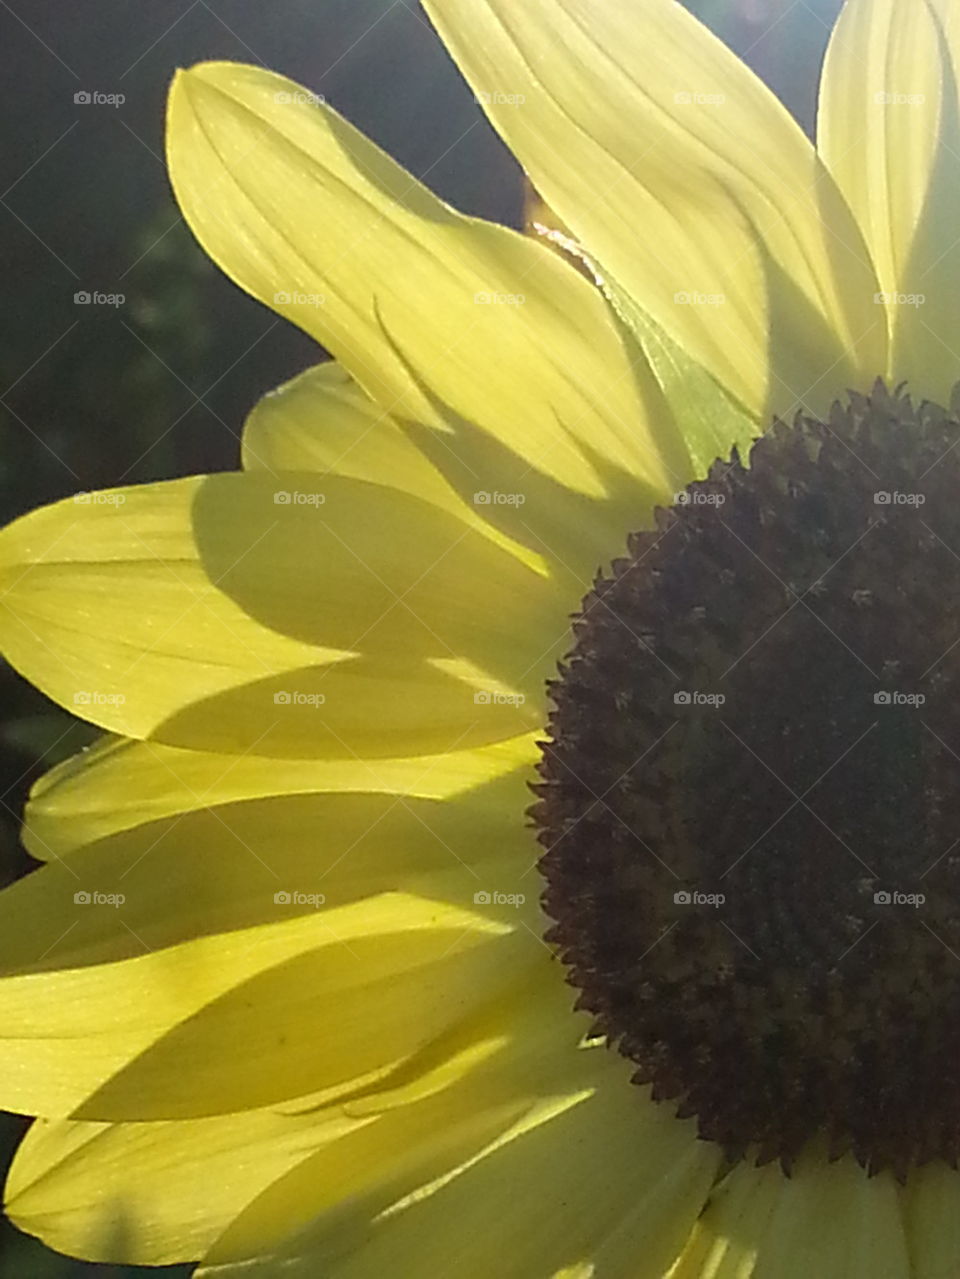 sunlight on sunflower